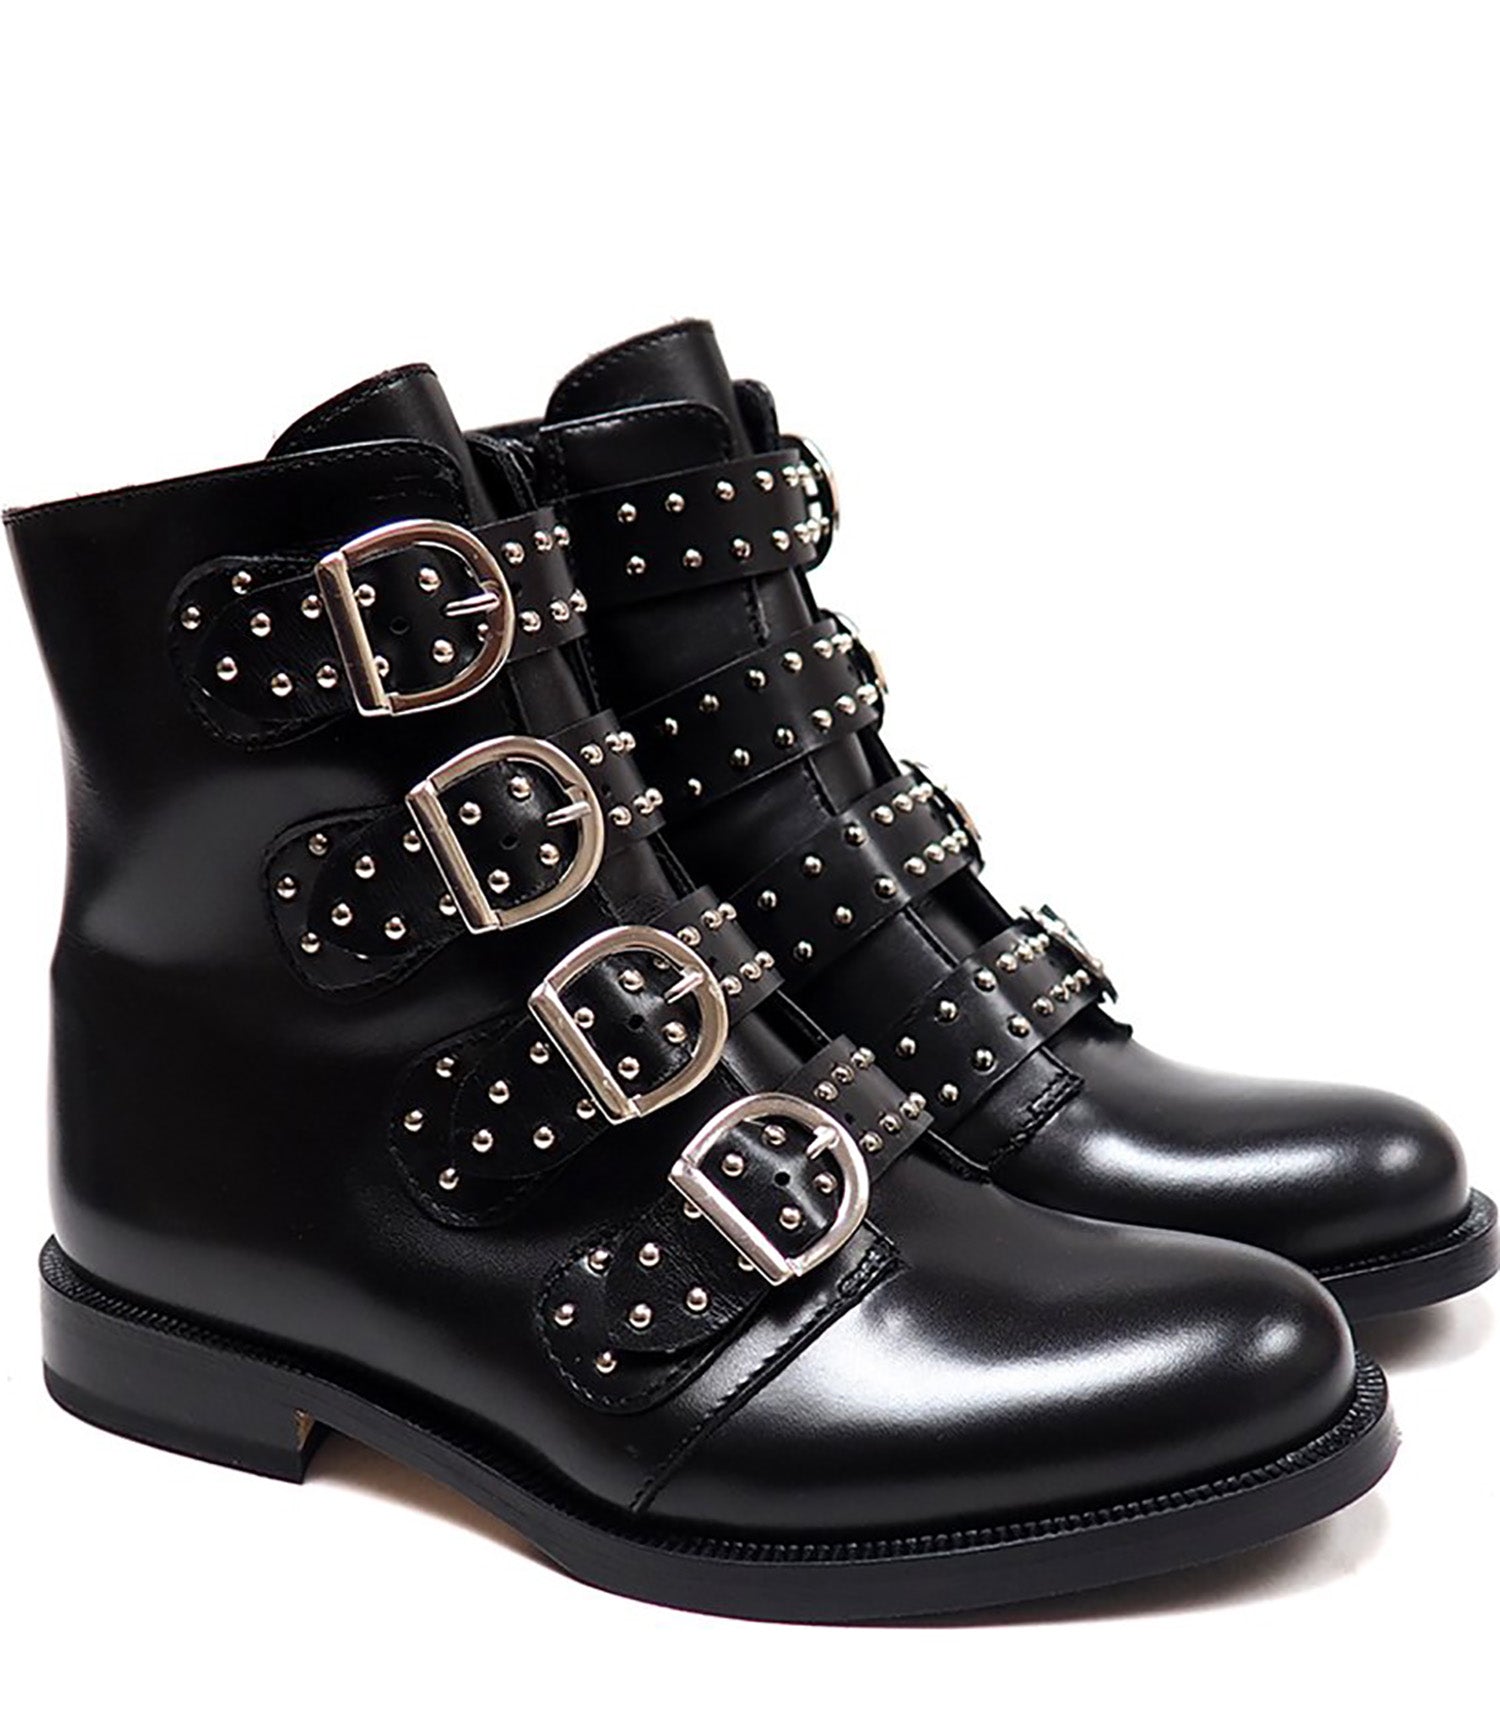 boots studs black